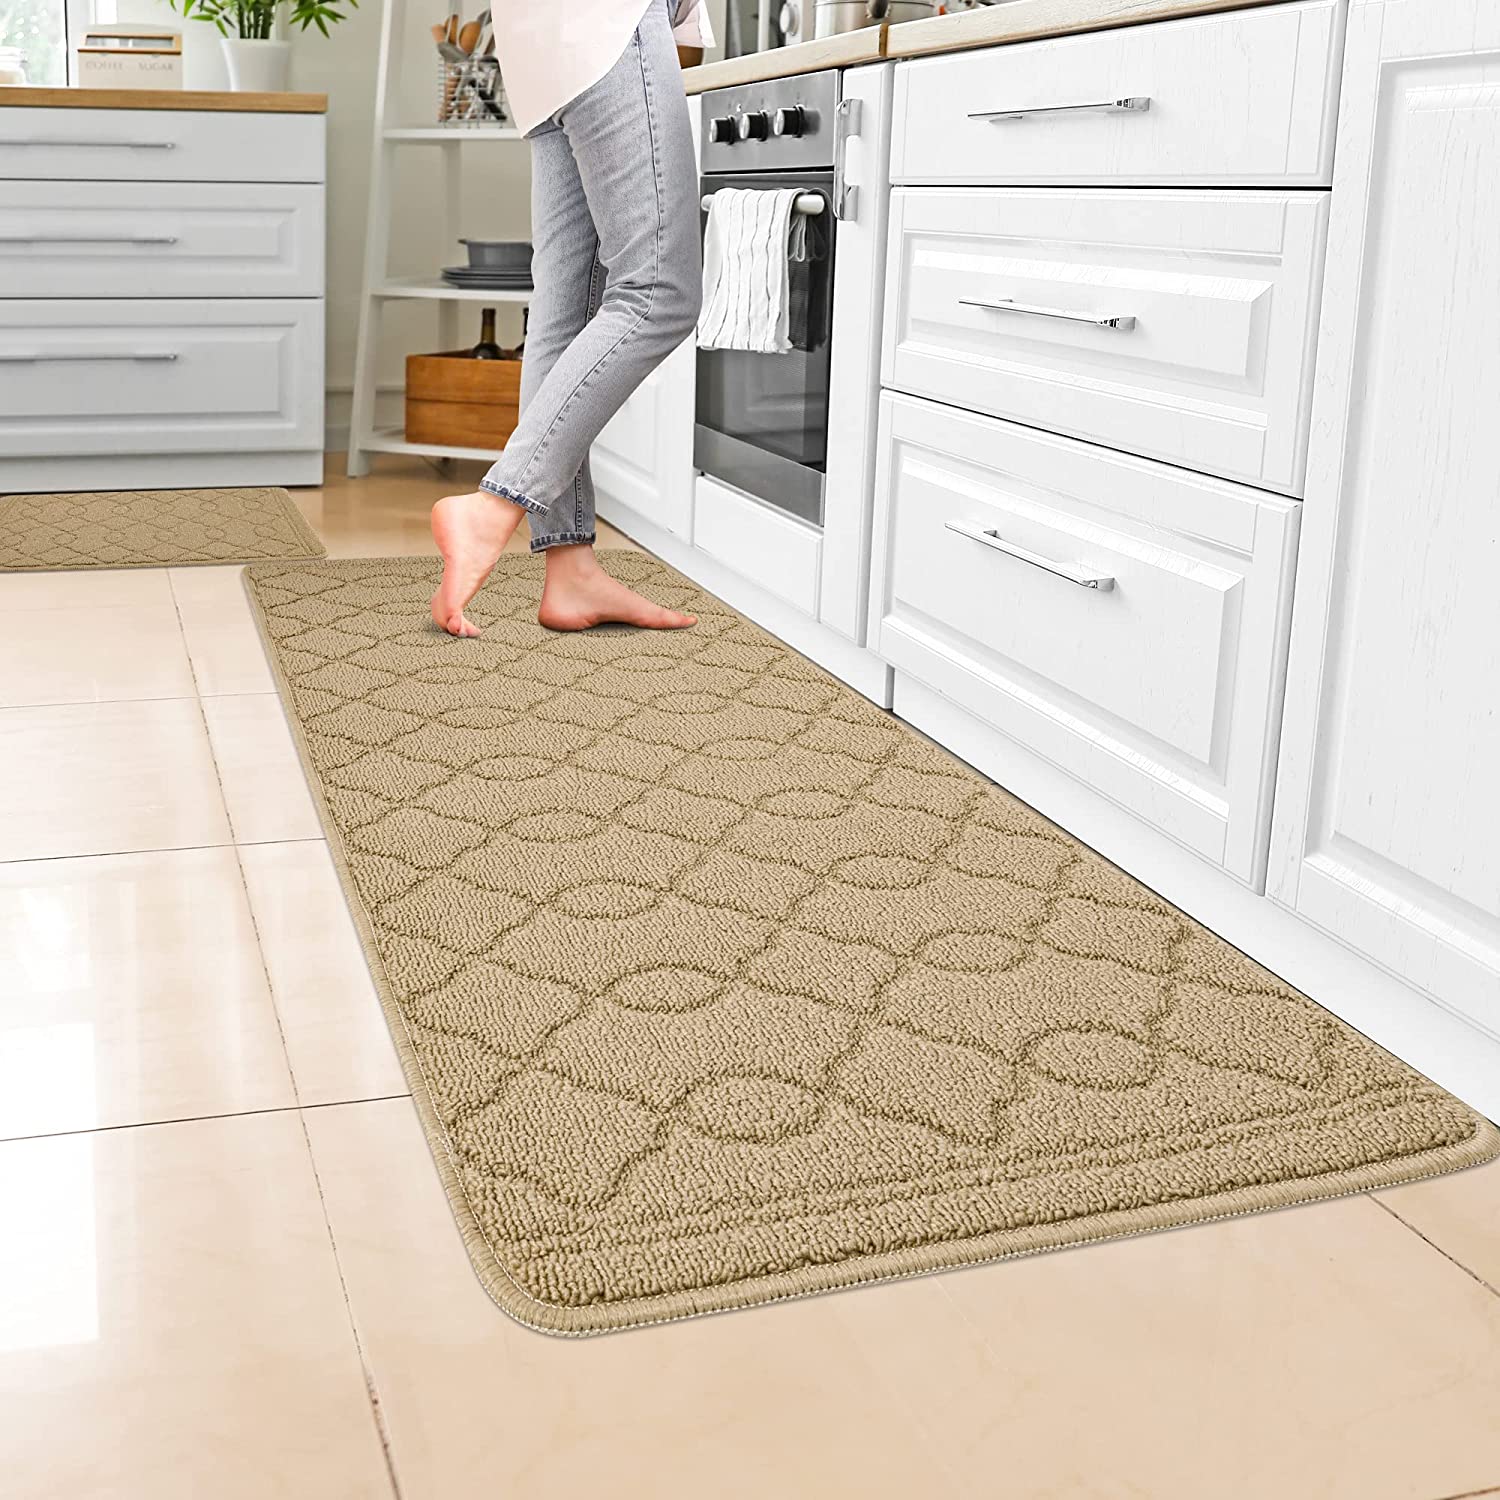 Tin Fleur De Lis Kitchen Mats Kitchen Rugs Runner Laundry Rug Non Slip  Floor Door Mats Soft Doormats Carpet Home Decor Set of 2 